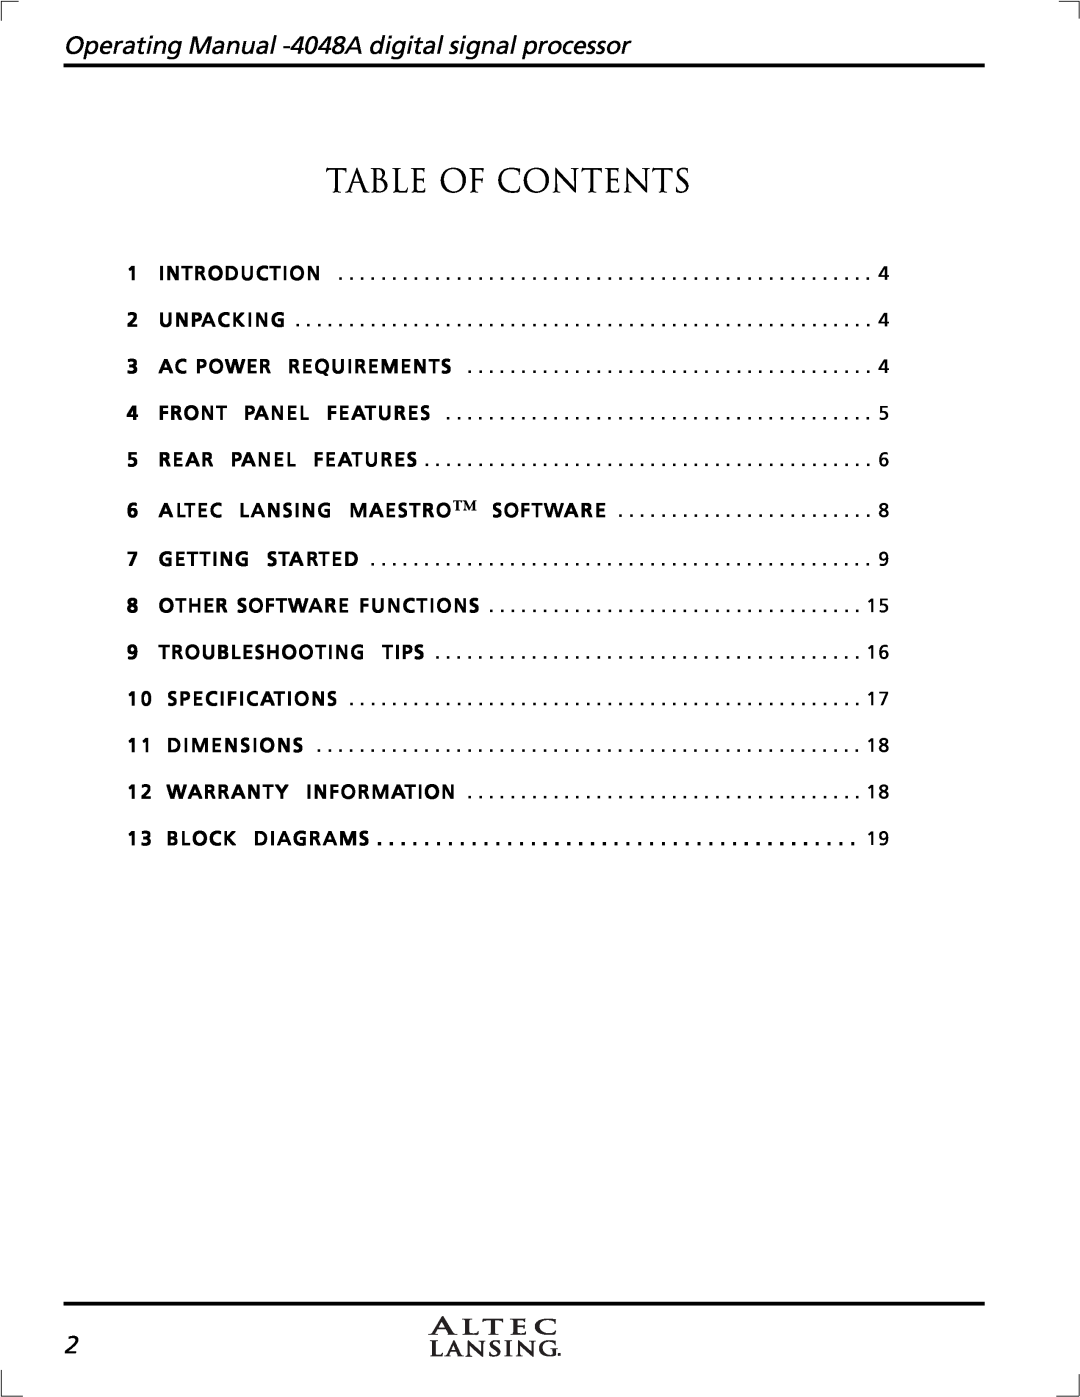 Altec Lansing 4948A manual Operating Manual -4048A digital signal processor, Table Of Contents 